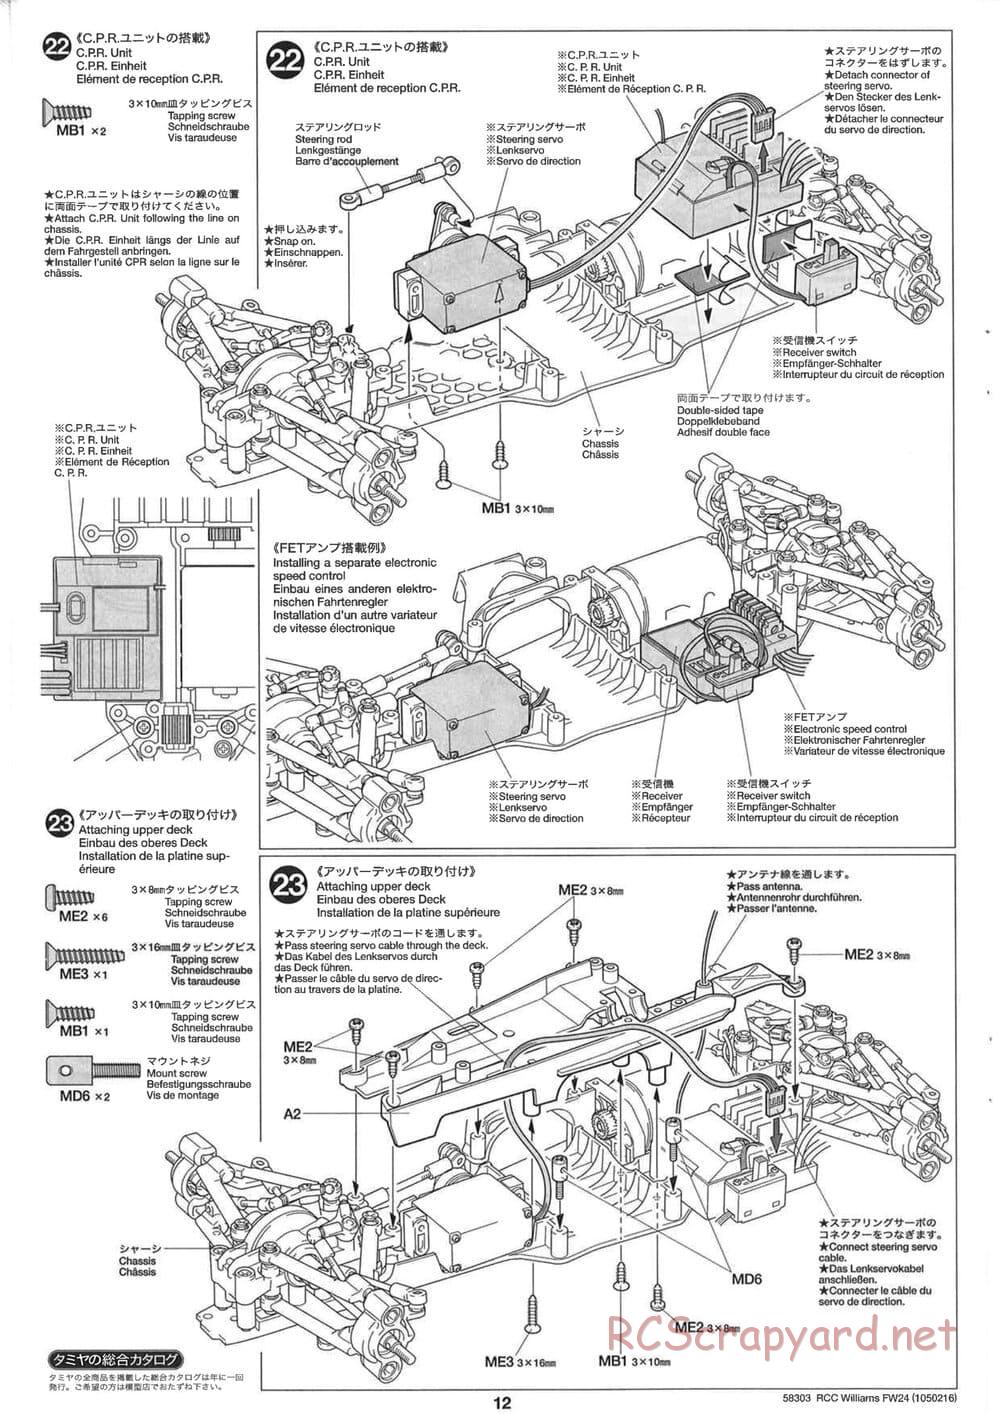 Tamiya - Williams F1 BMW FW24 - F201 Chassis - Manual - Page 12